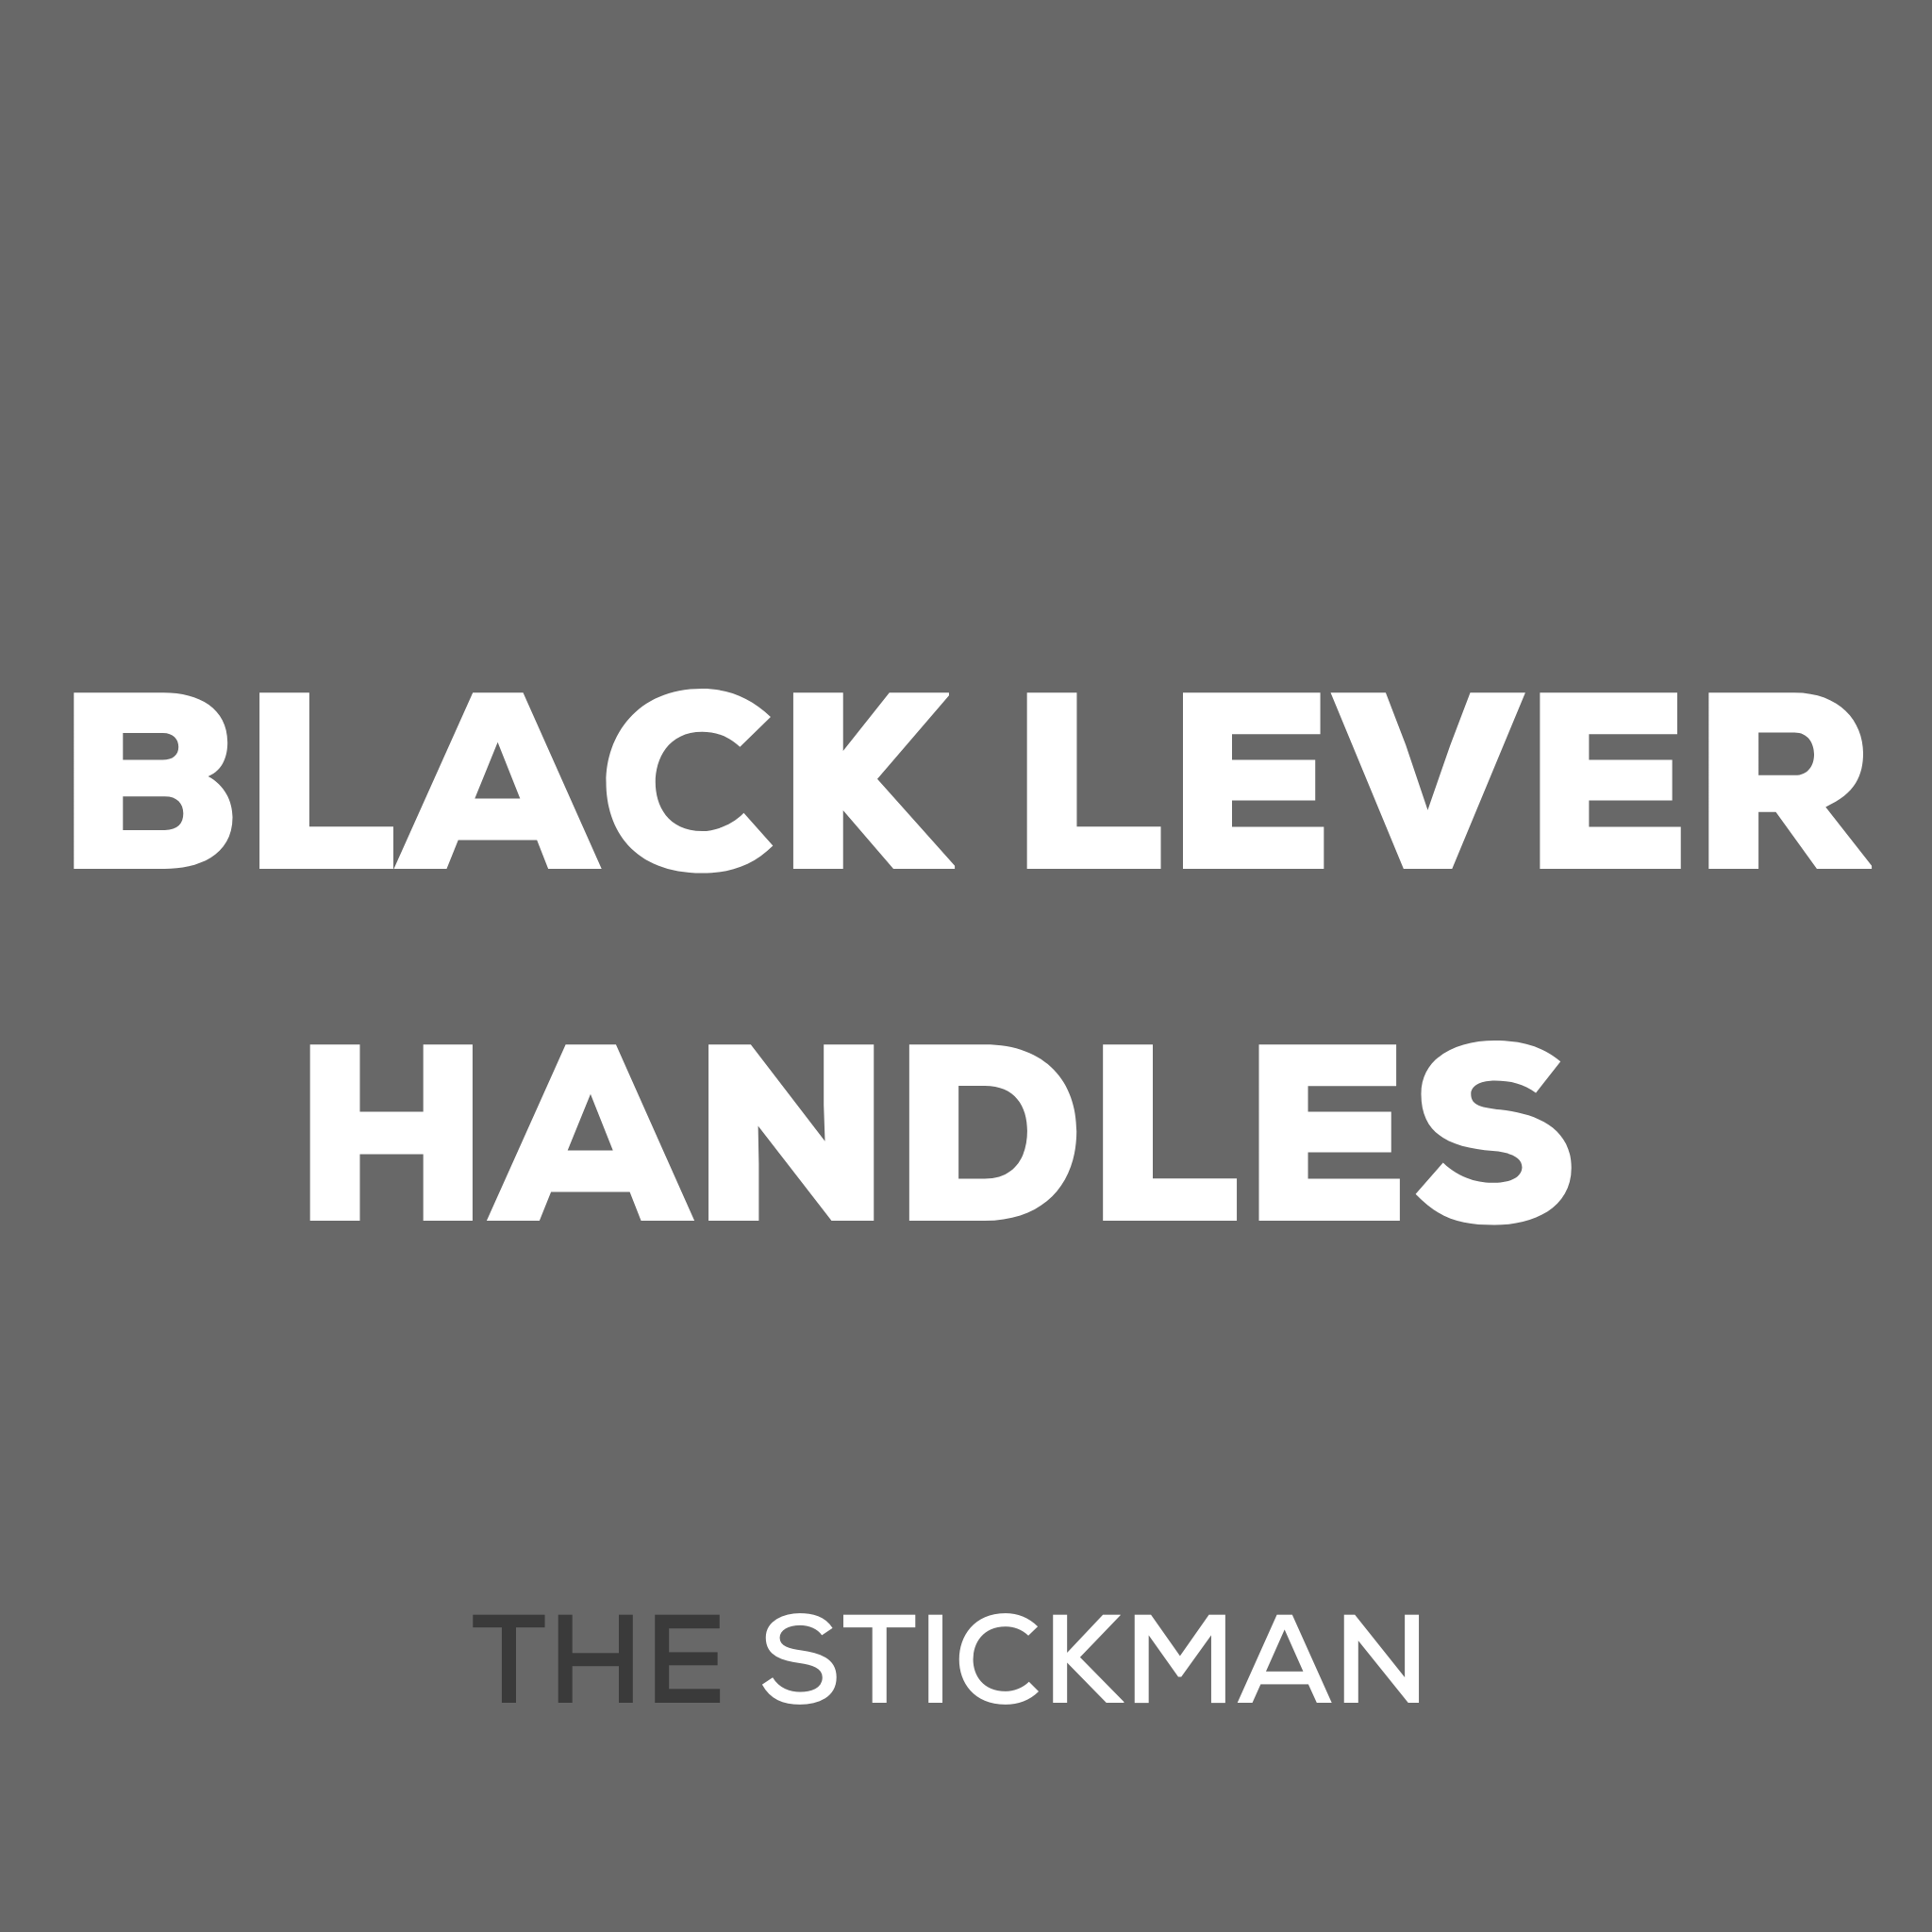 BLACK LEVER HANDLES